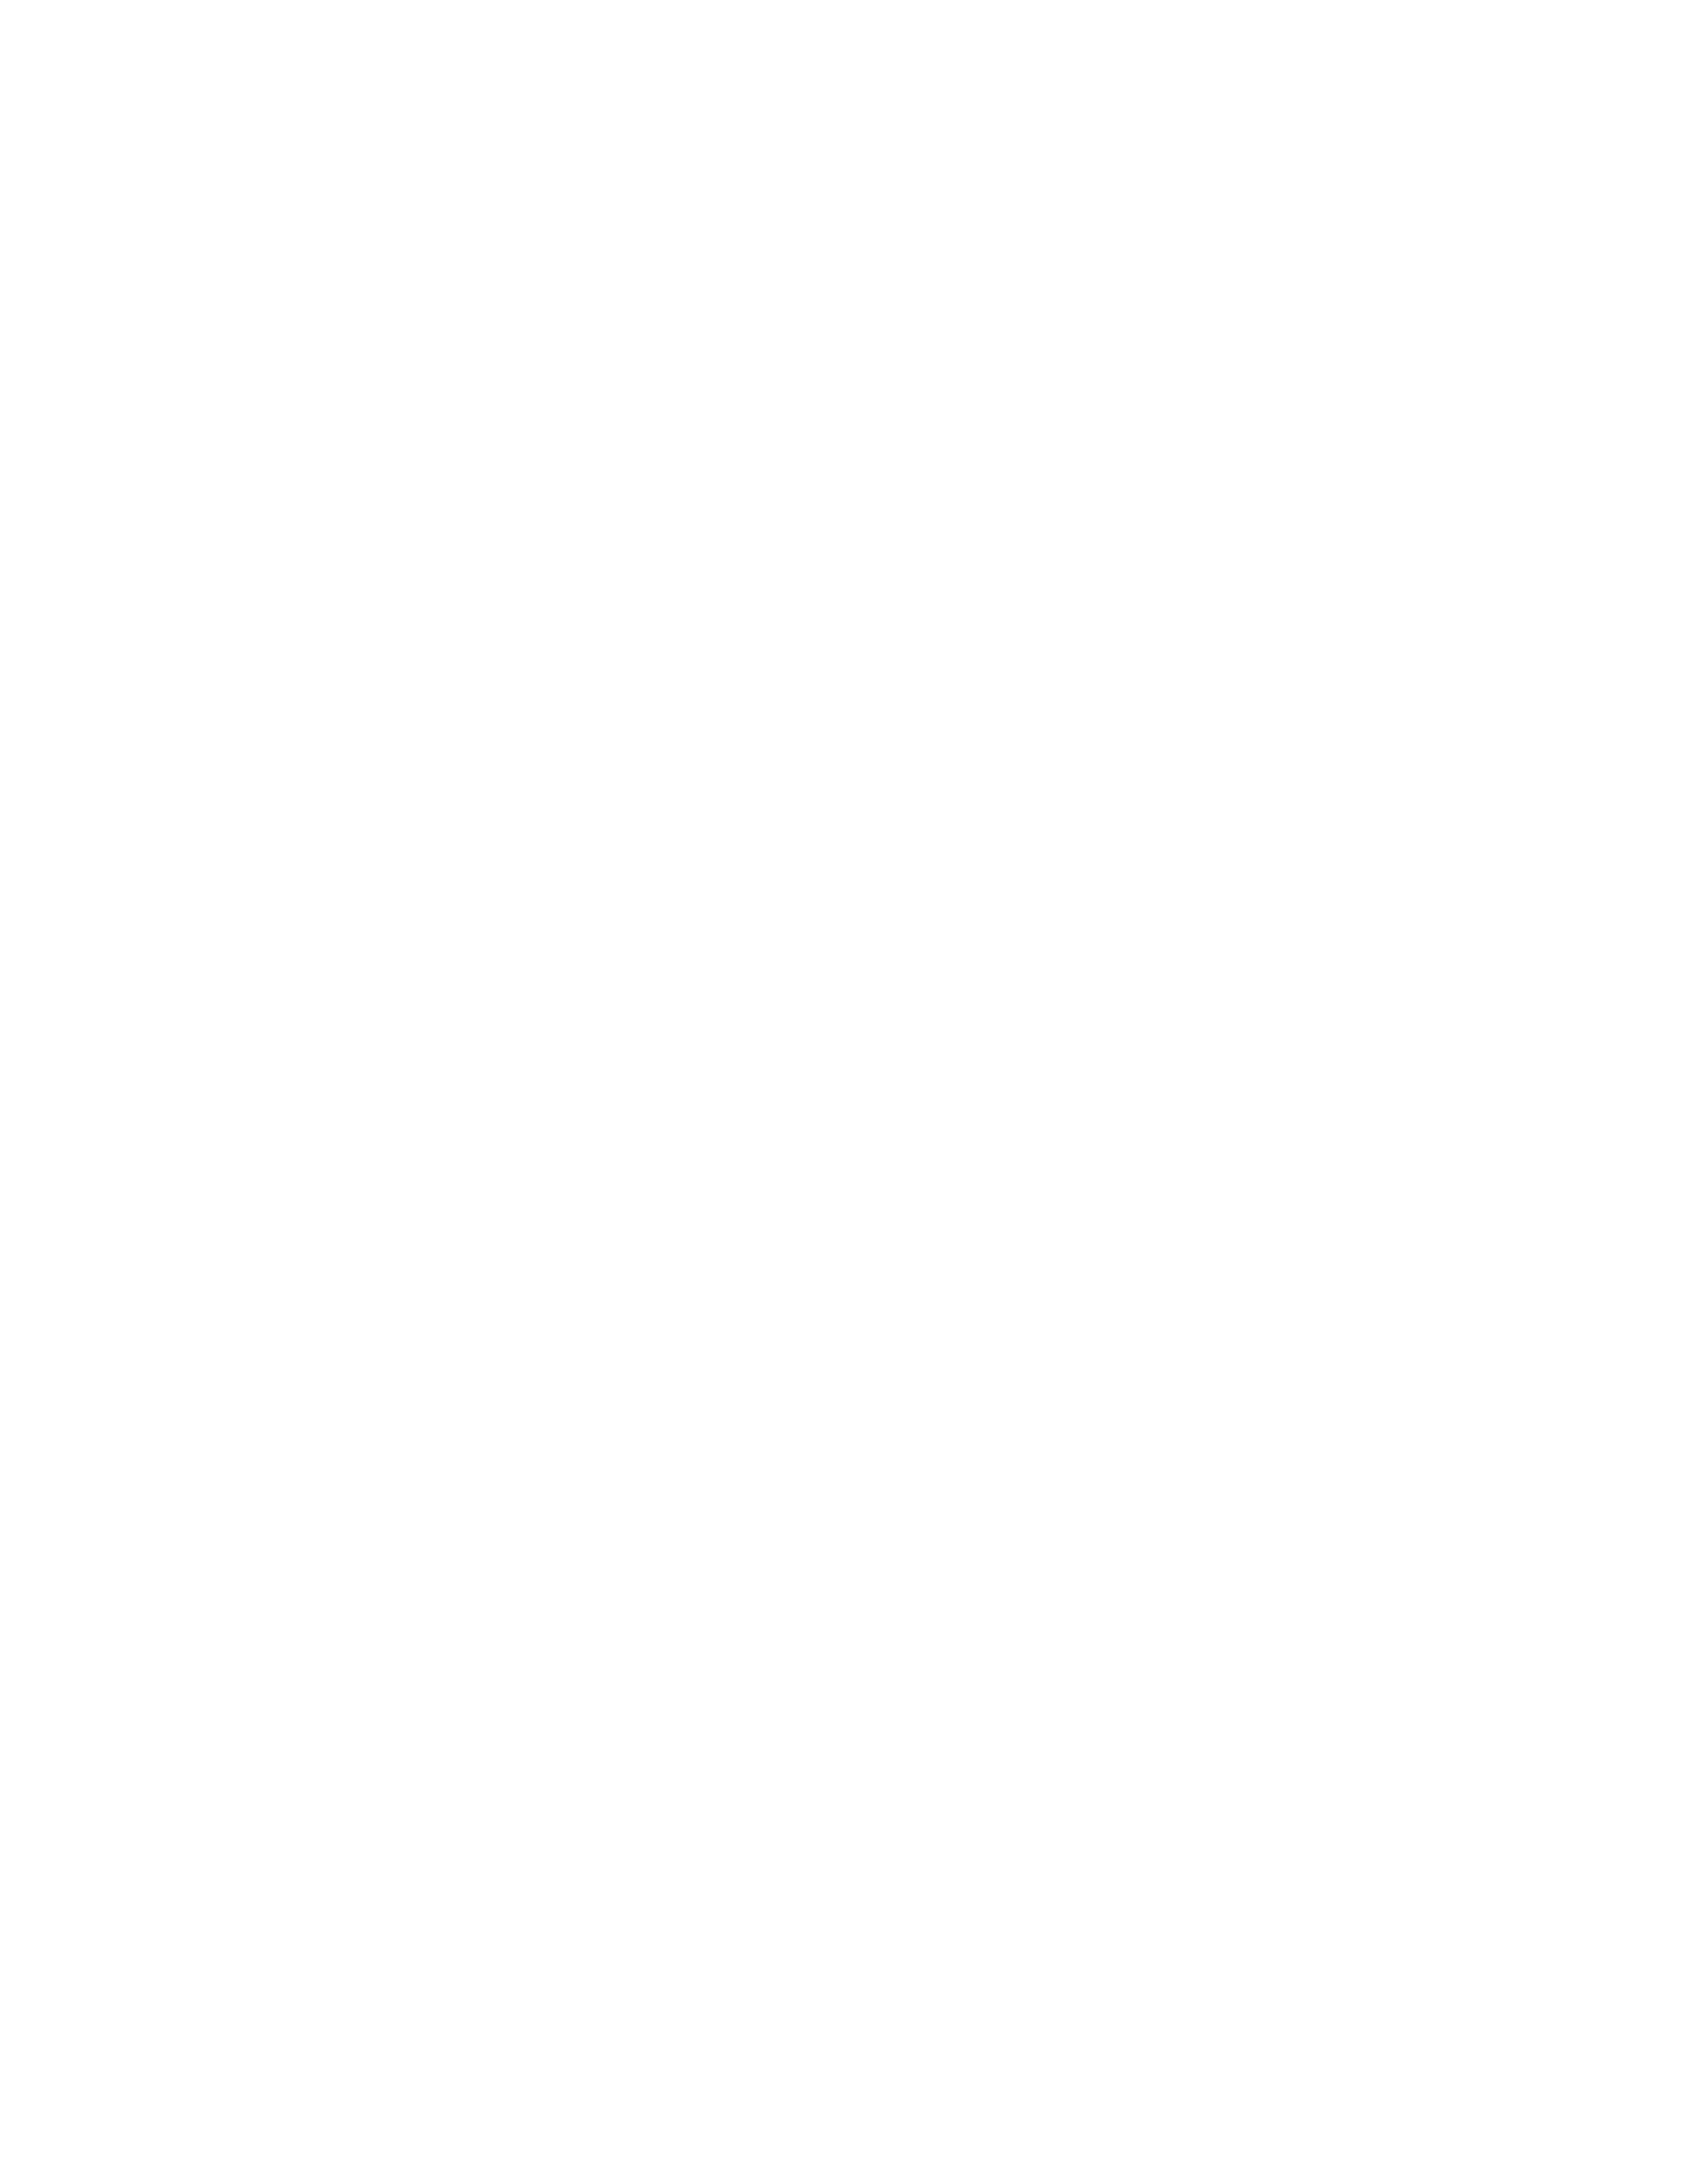 PVH logo in white